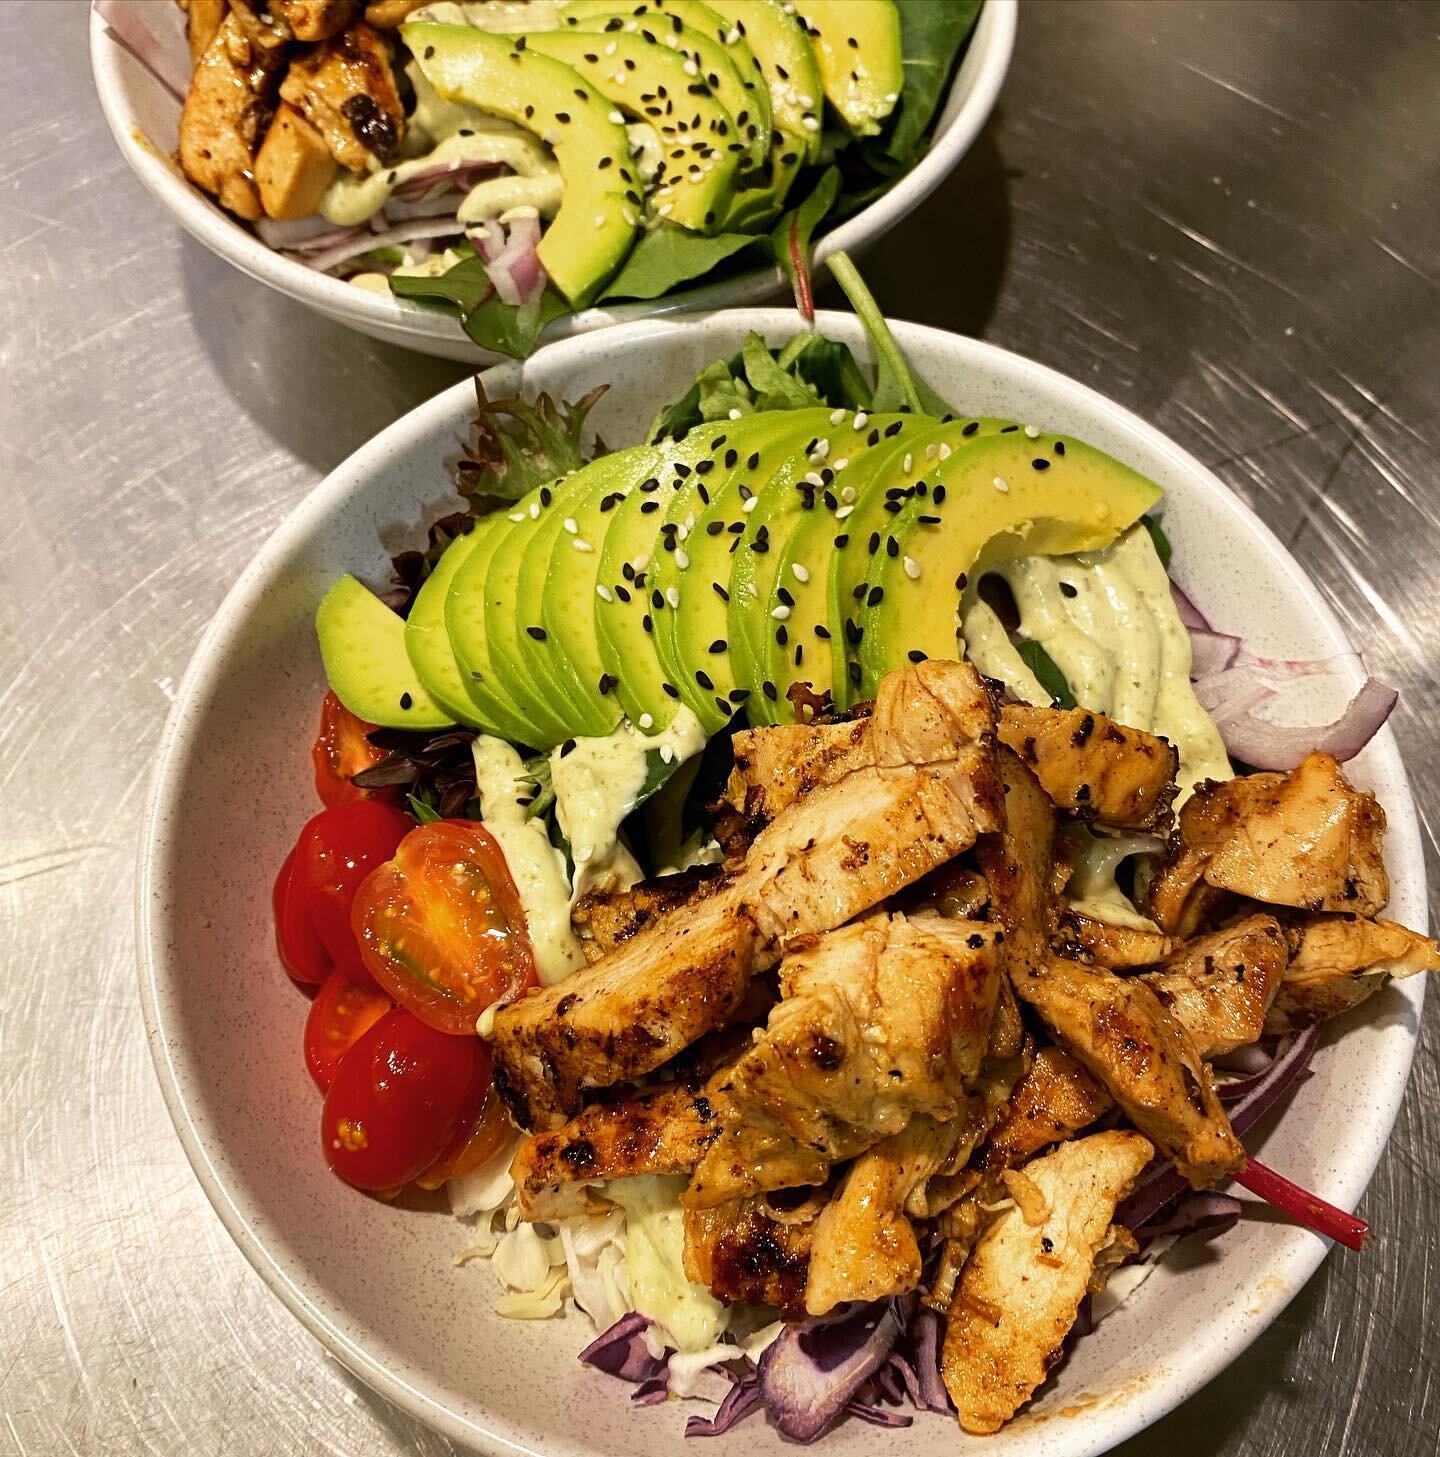 Nothing taste as good as our healthy bowl. Call to order now! #heathyfood #saladideas #freshfood #takeaway #dinein #ashburtonrestaurant #burger